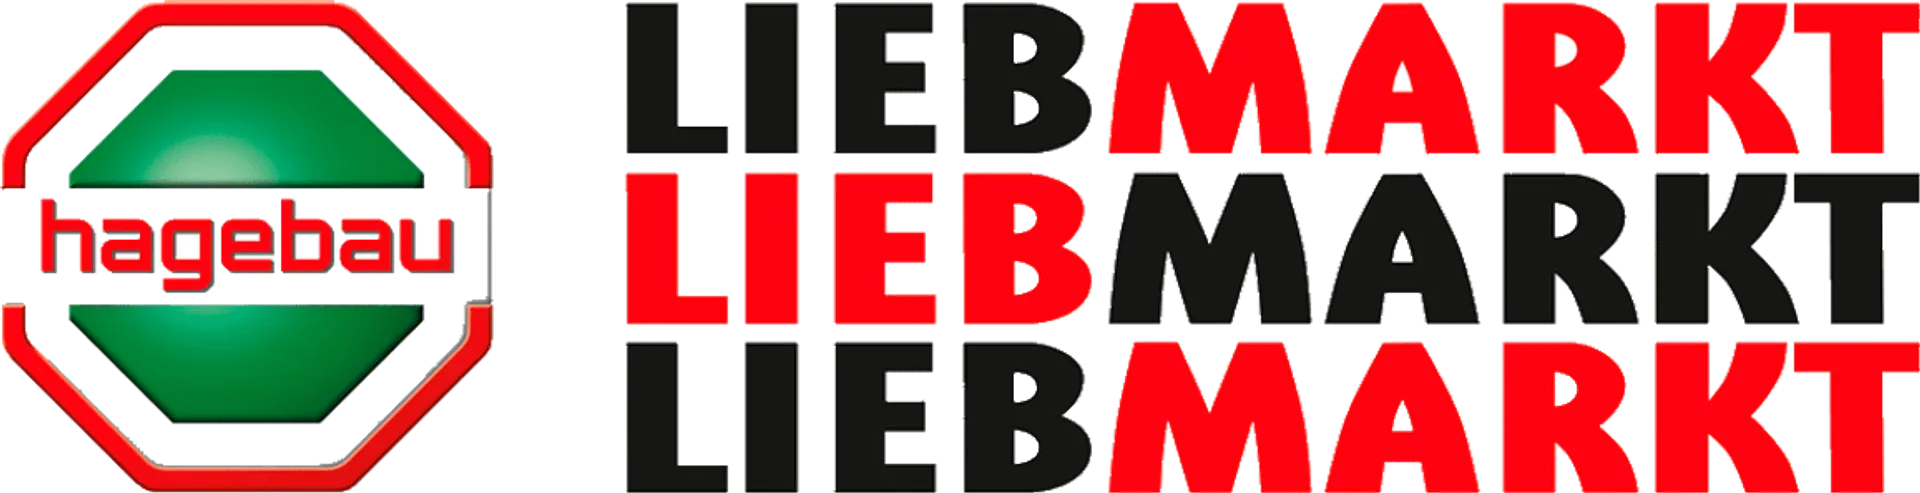 LIEBMARKT logo die aktuell Flugblatt